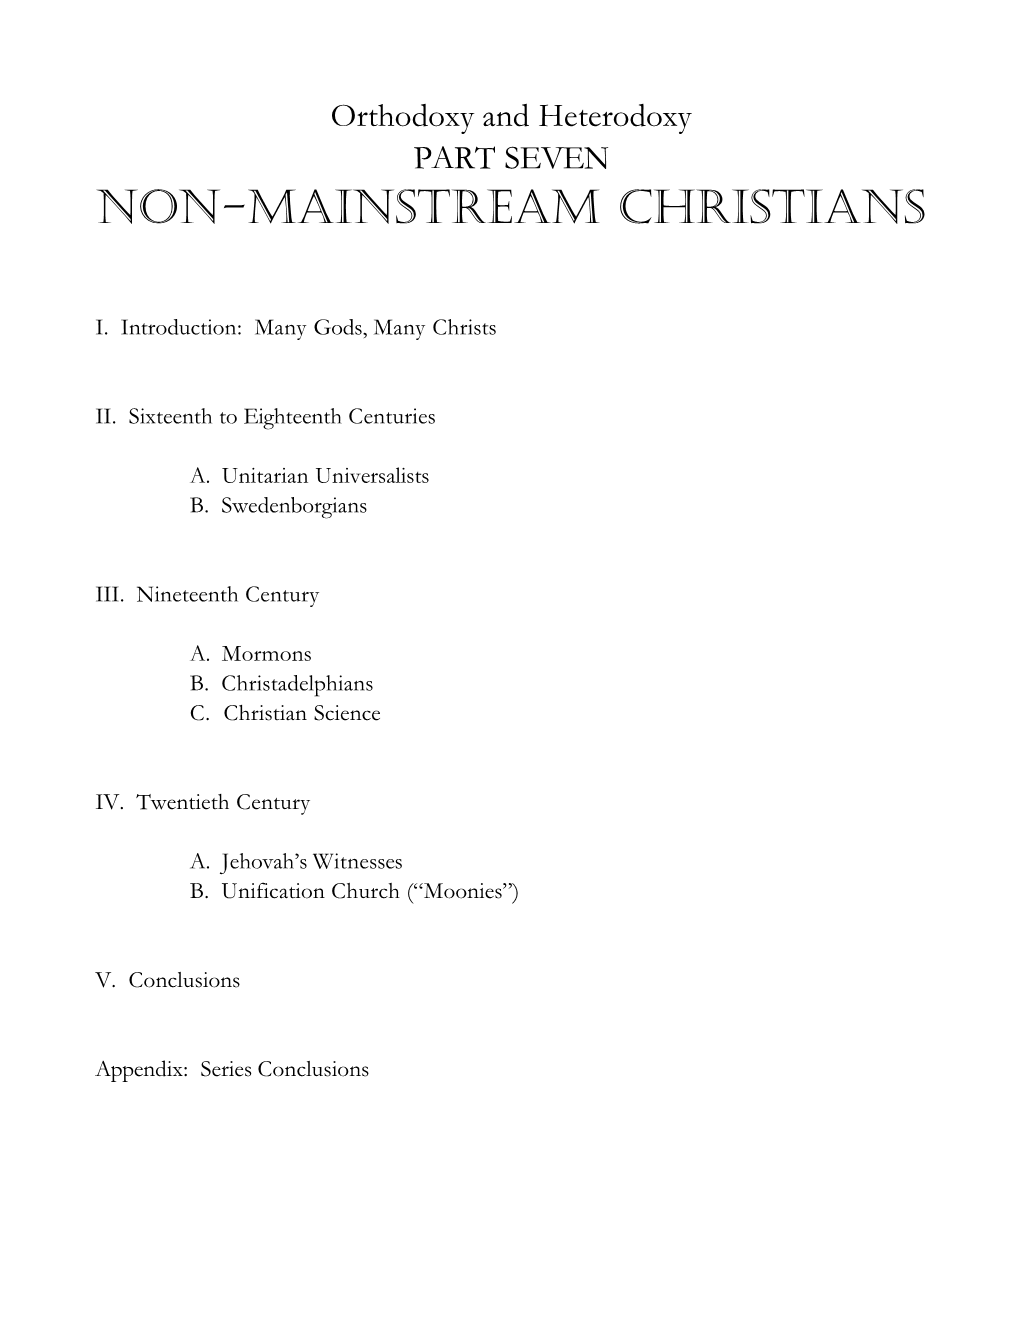 Non-Mainstream Christians